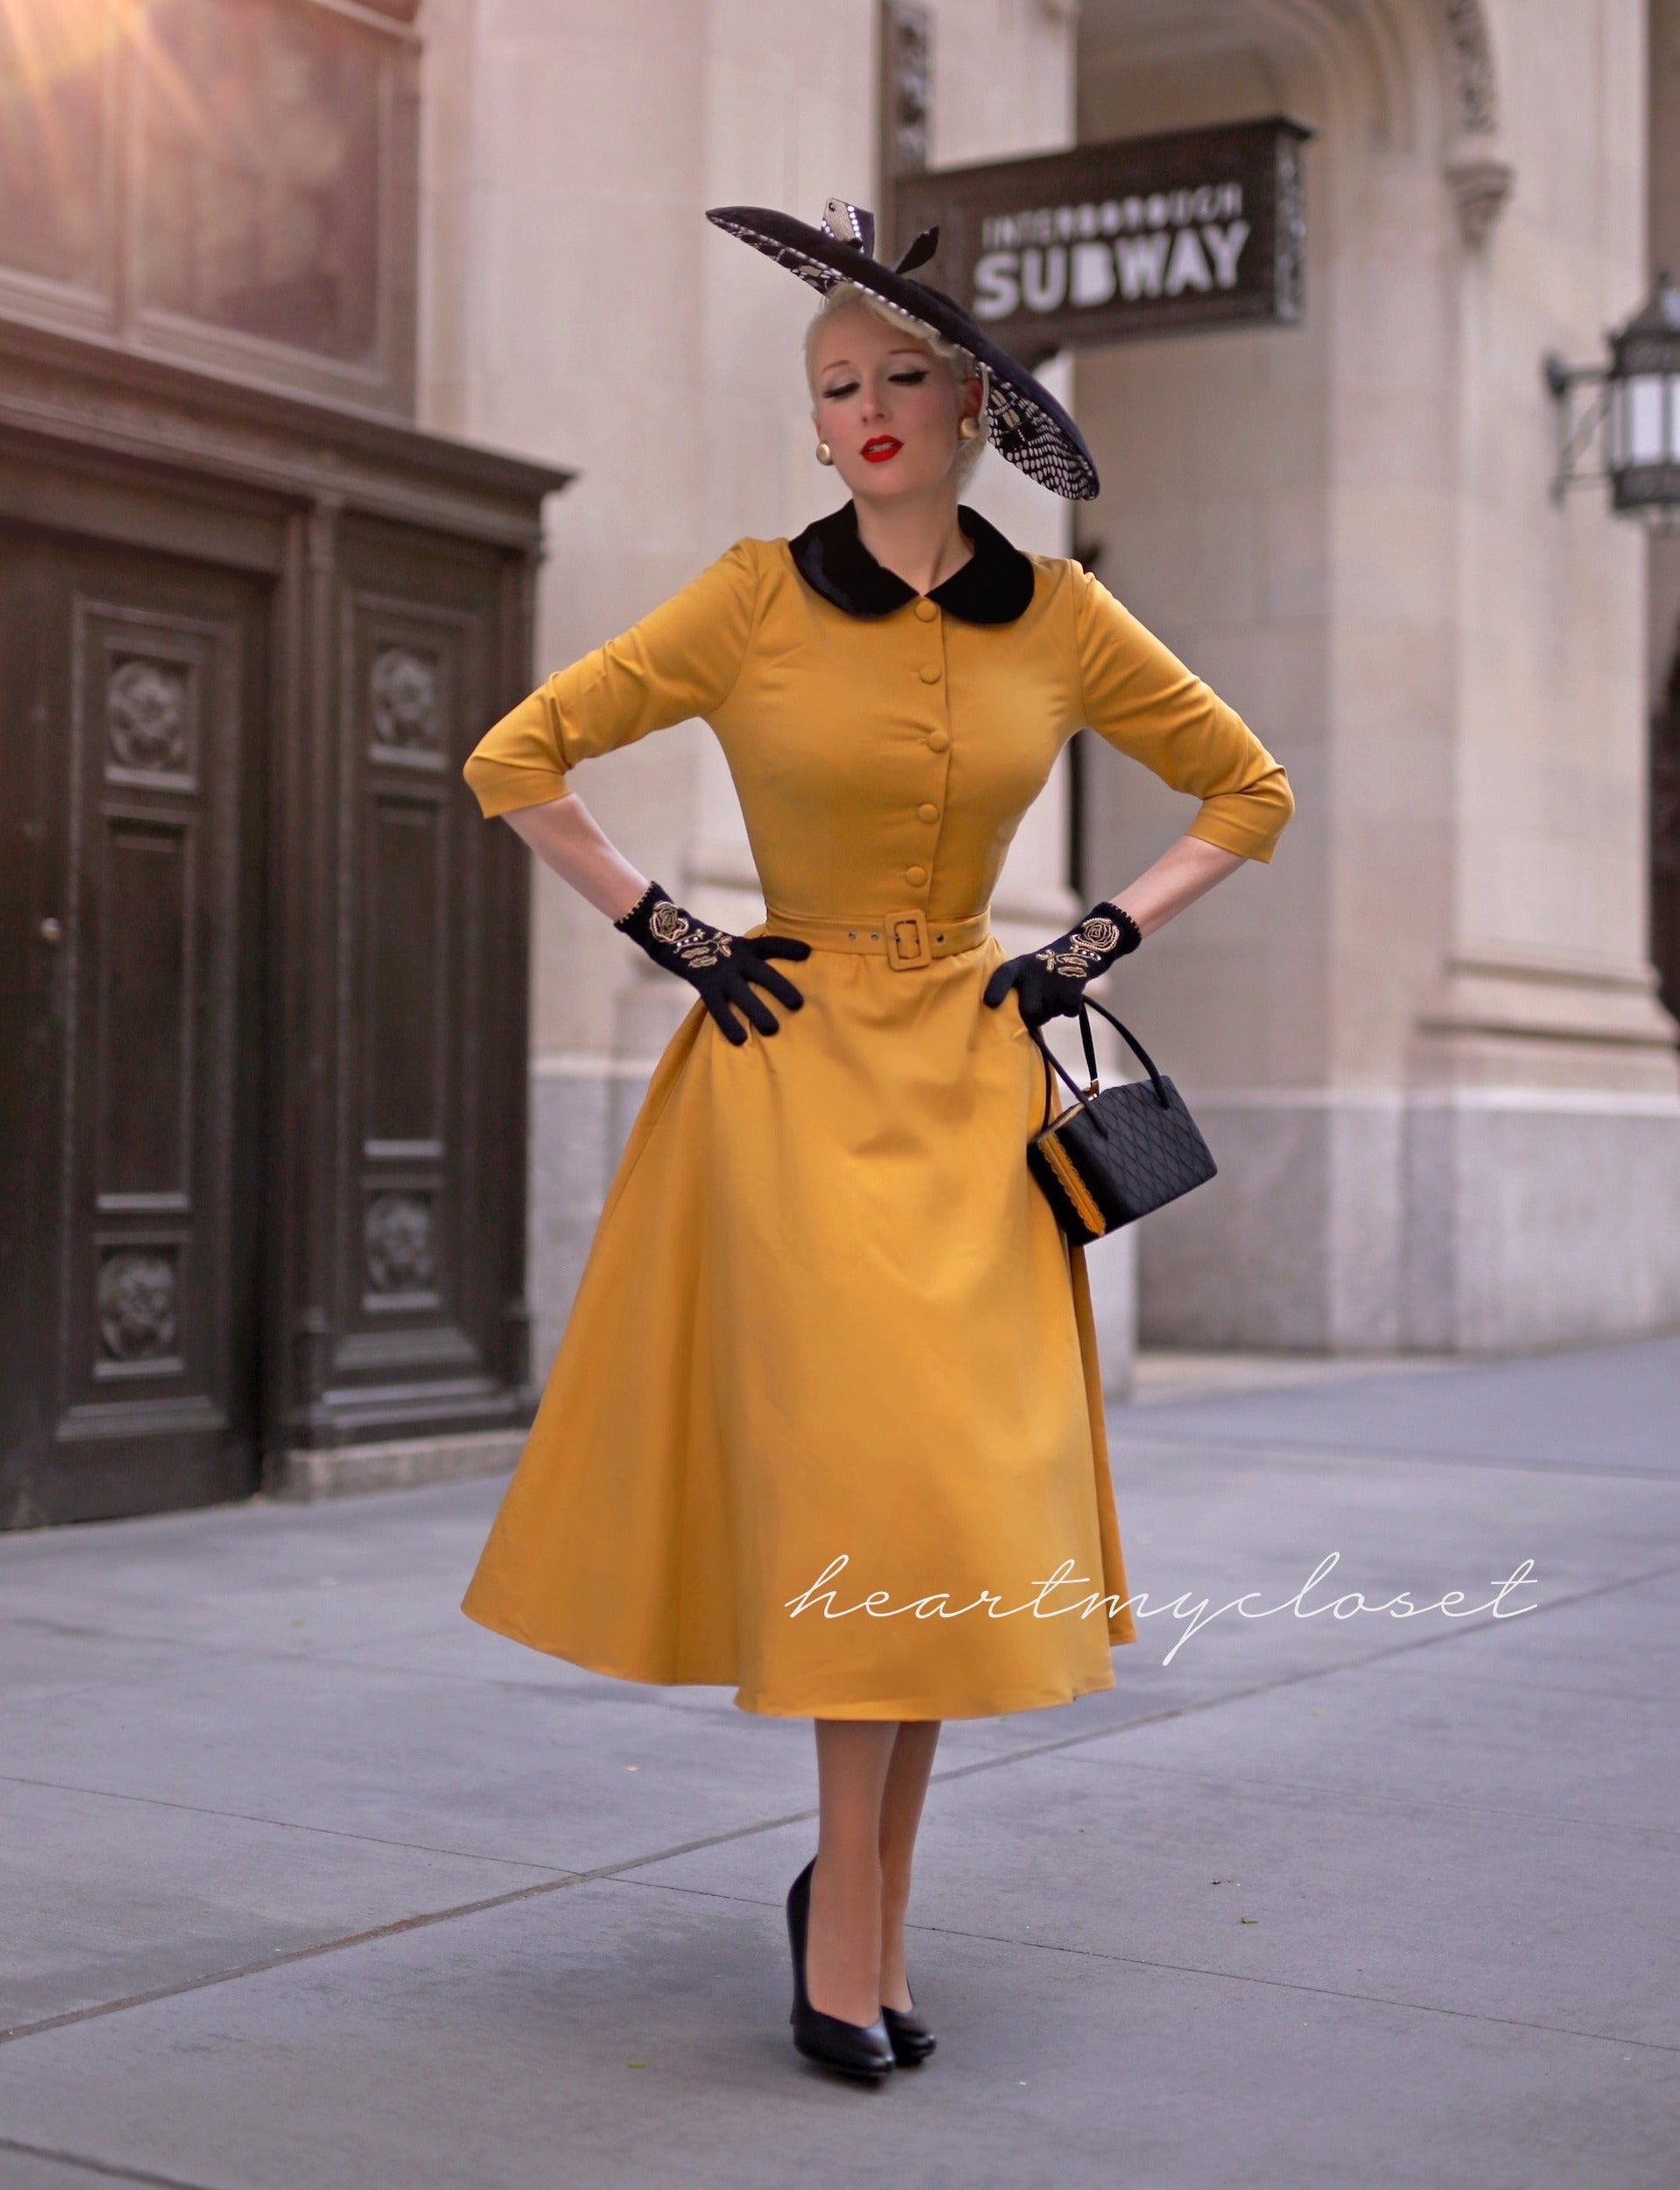 1940s style dresses